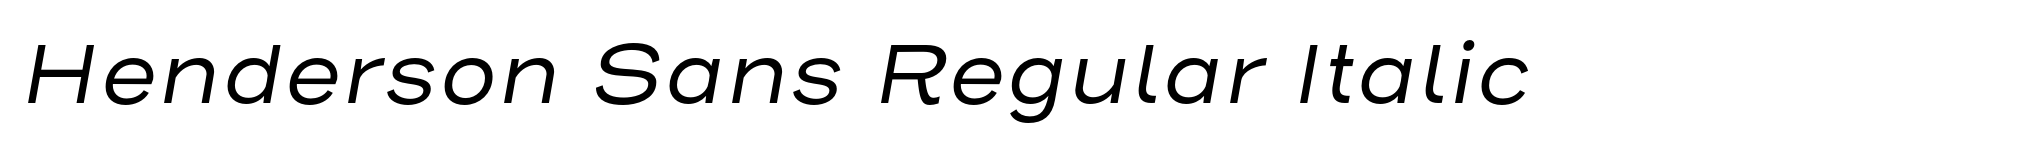 Henderson Sans Regular Italic image